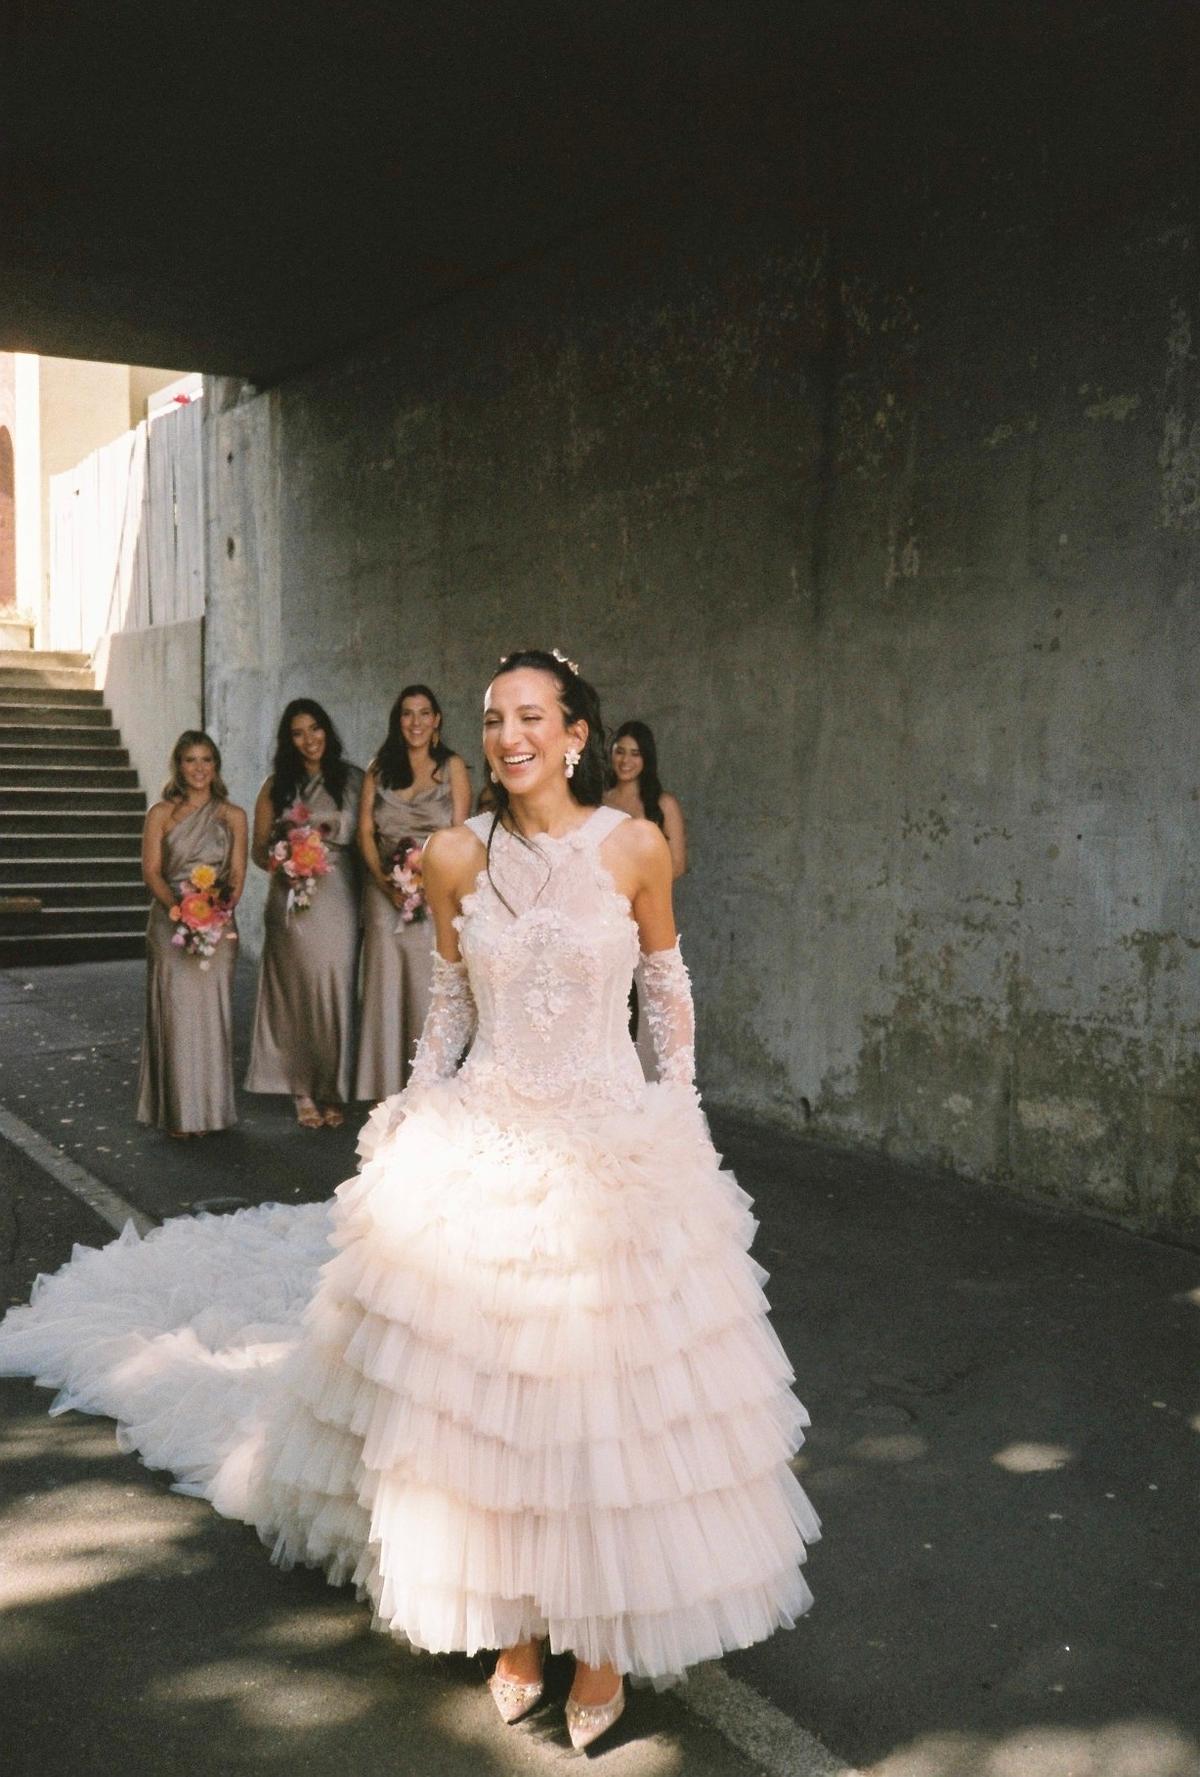 Mrs. Fernandez with her bridesmaids in the background. (Courtesy of Anemotion via <a href="https://www.instagram.com/jasmyn/">Jasmine Fernandez</a>)